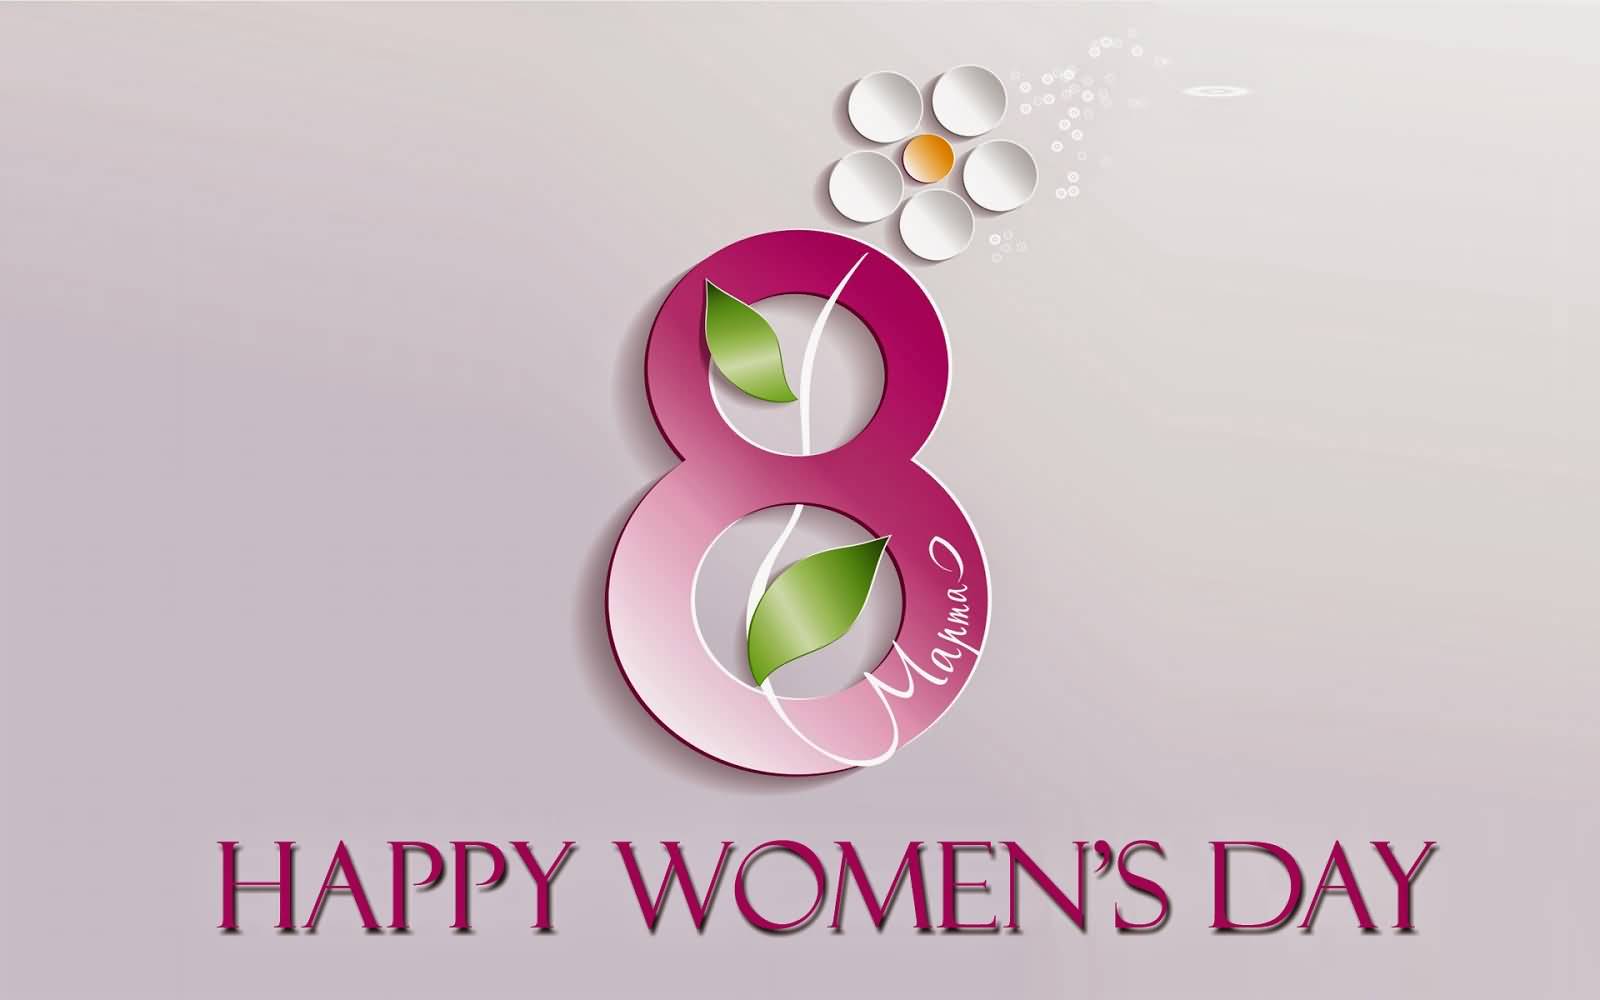 8 March Happy Women’s Day